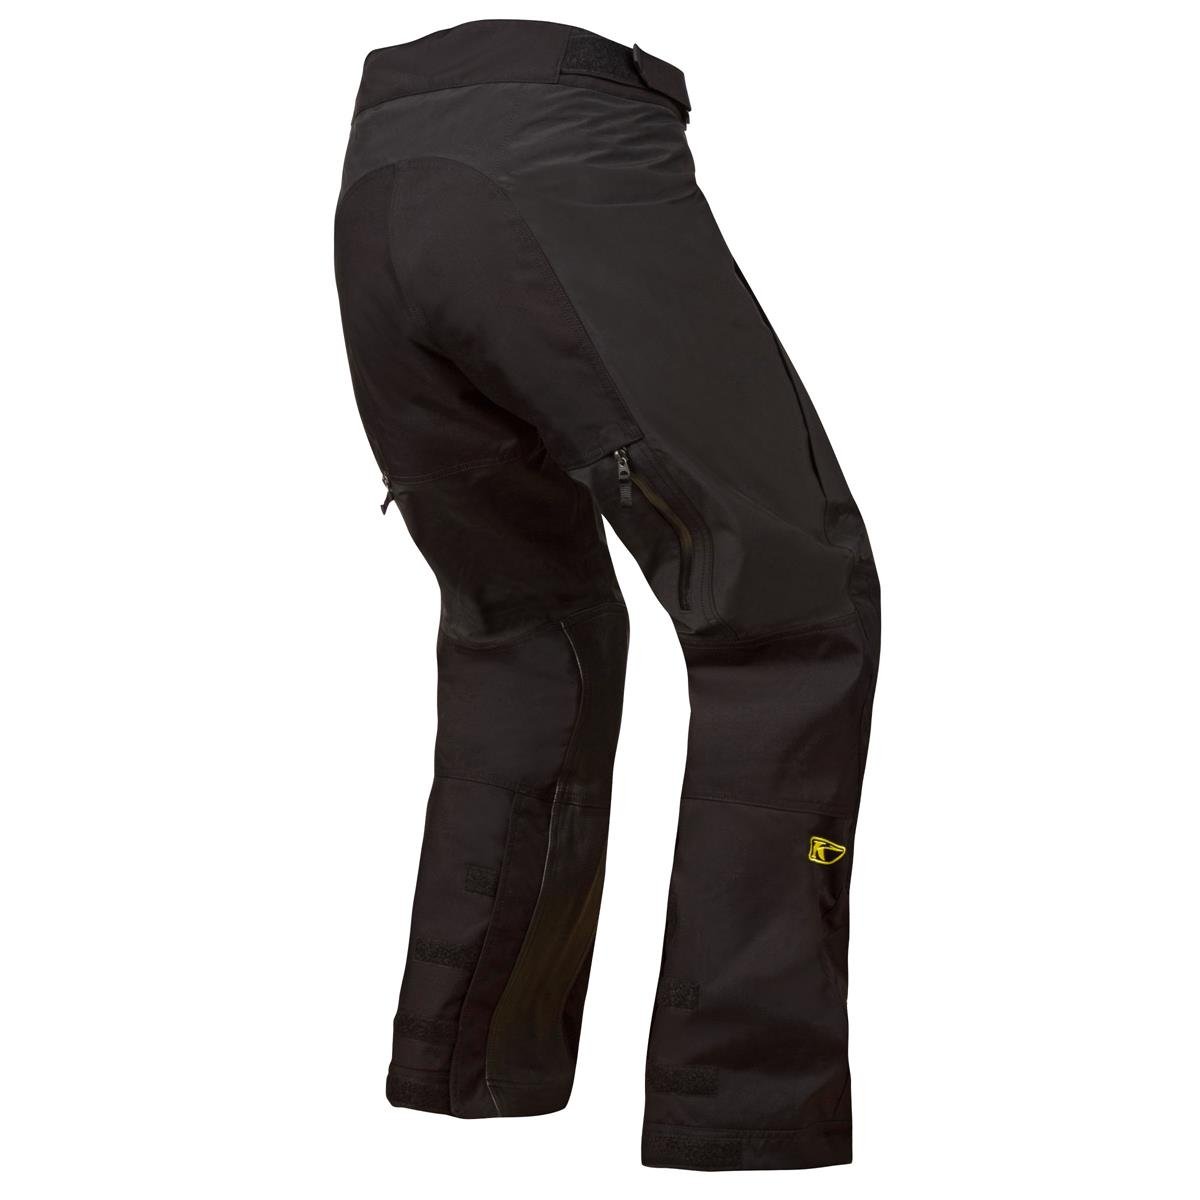 Black KLIM Tactical Pants Mens Undergarment MX Motorcycle Body Armor 